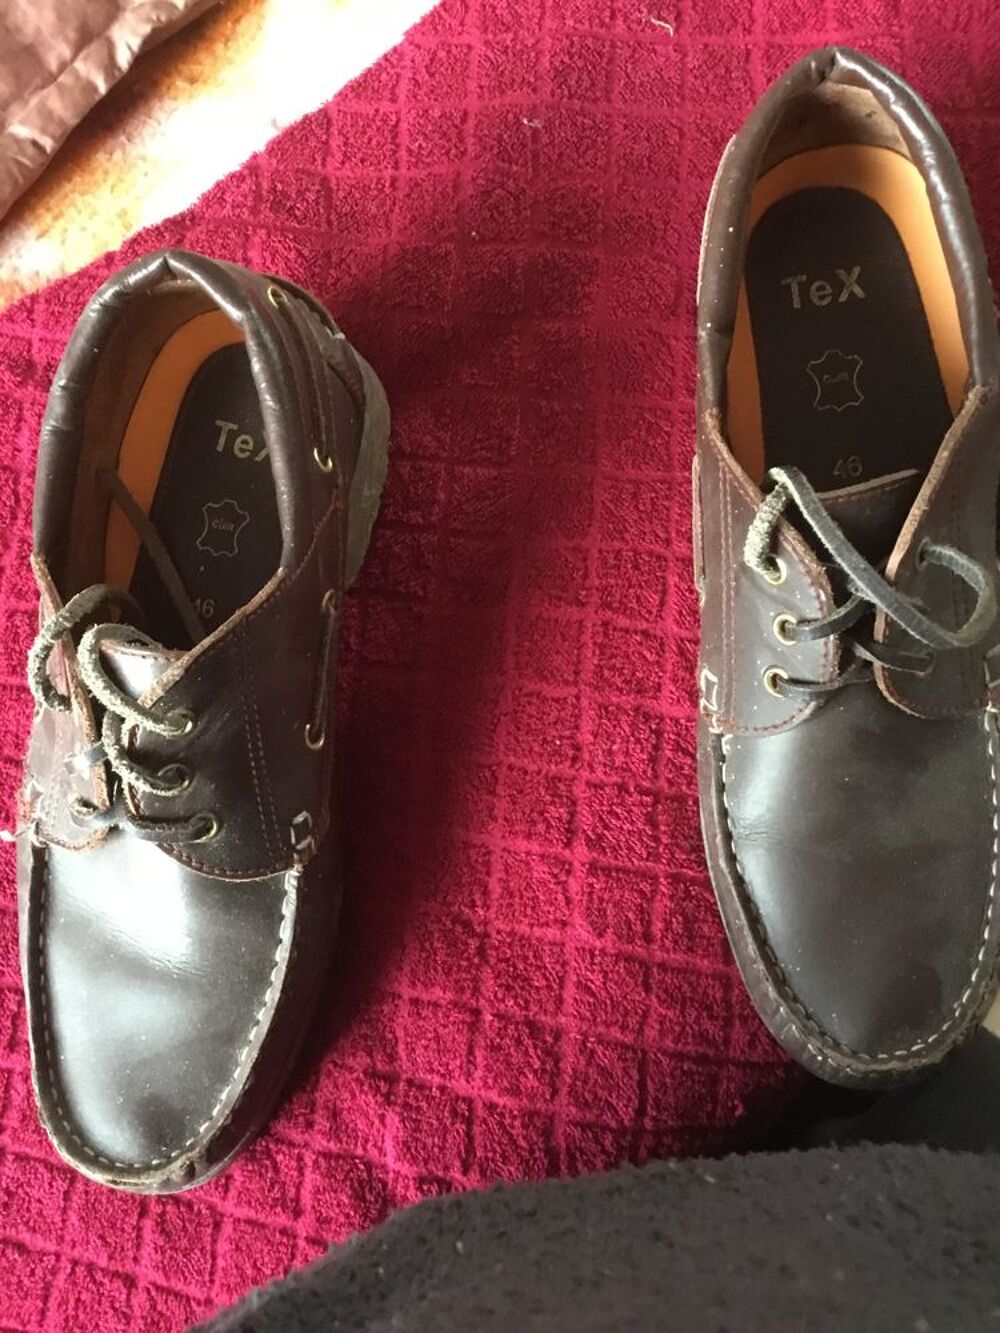 Chaussures homme cuir gris argent